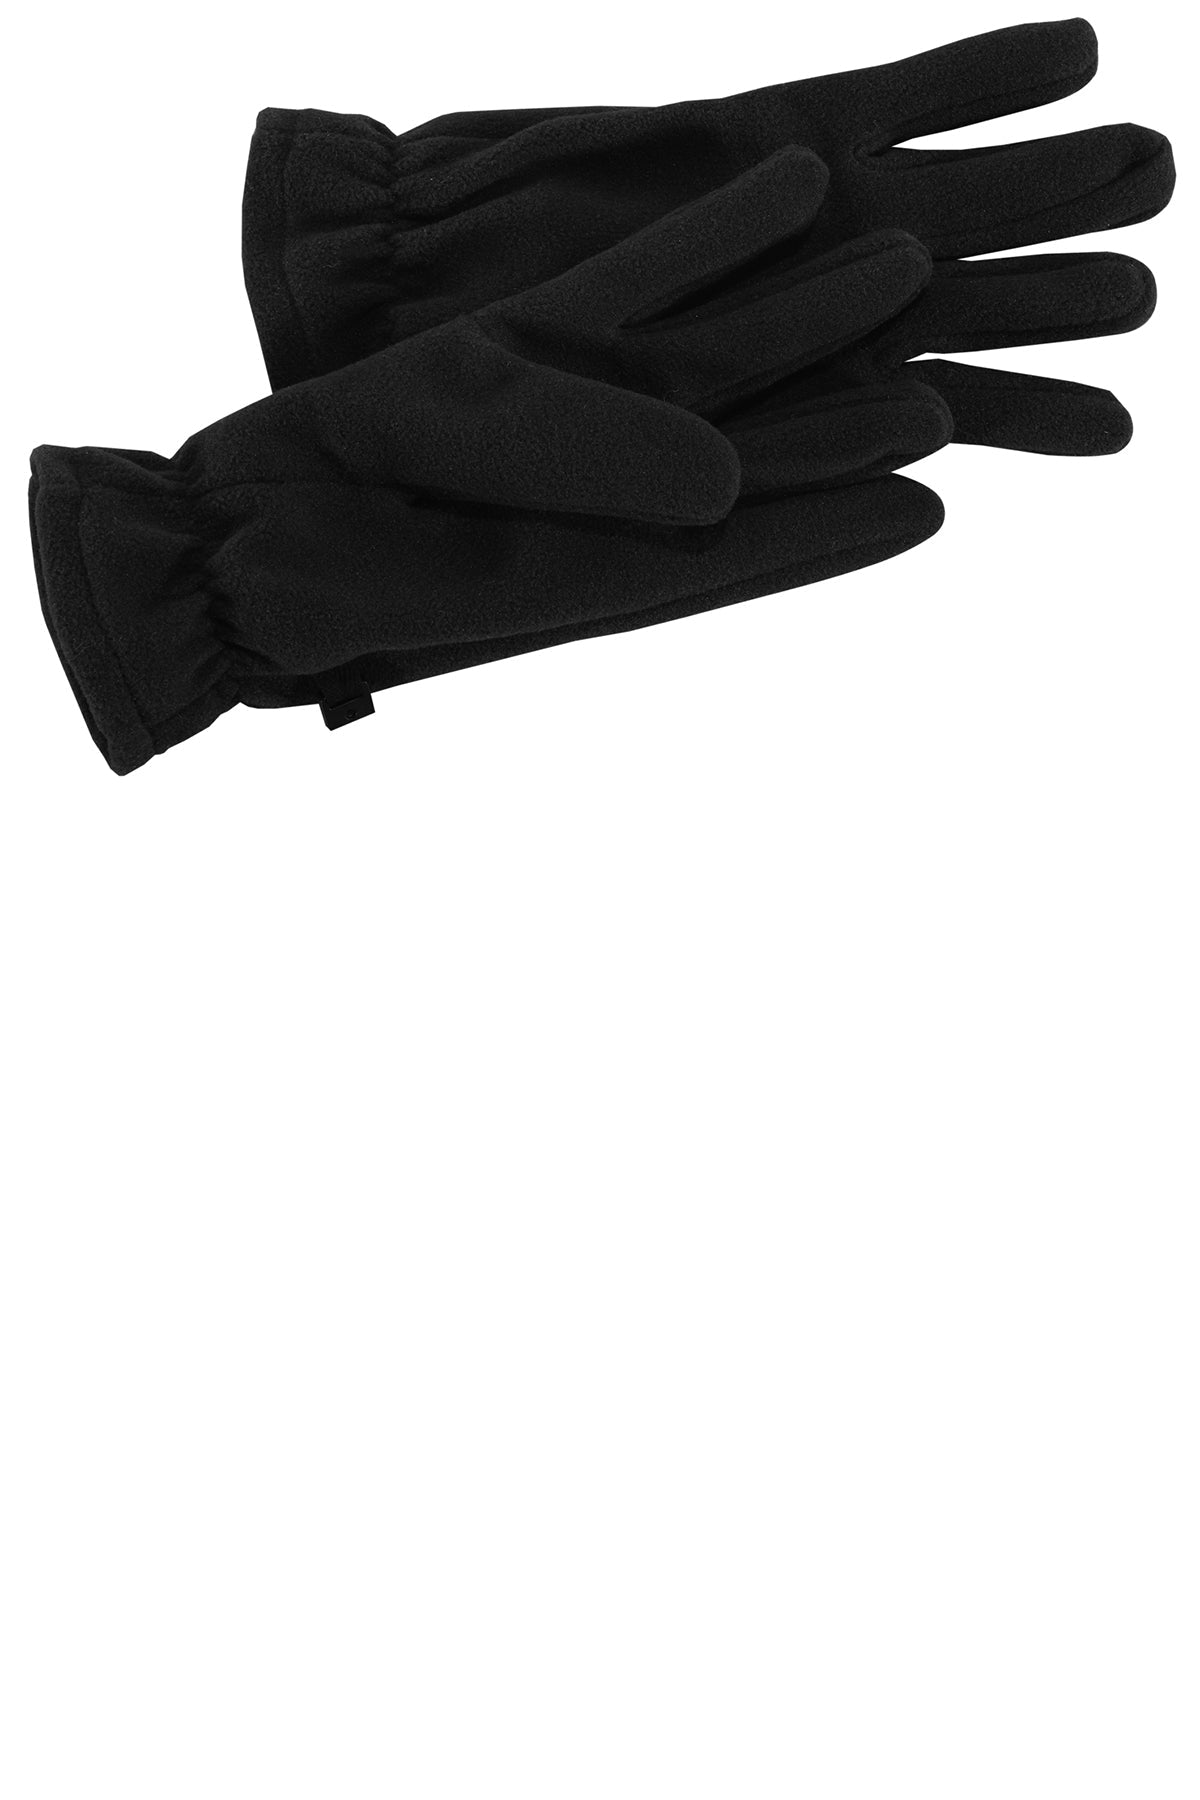 port authority fleece gloves gl01 black